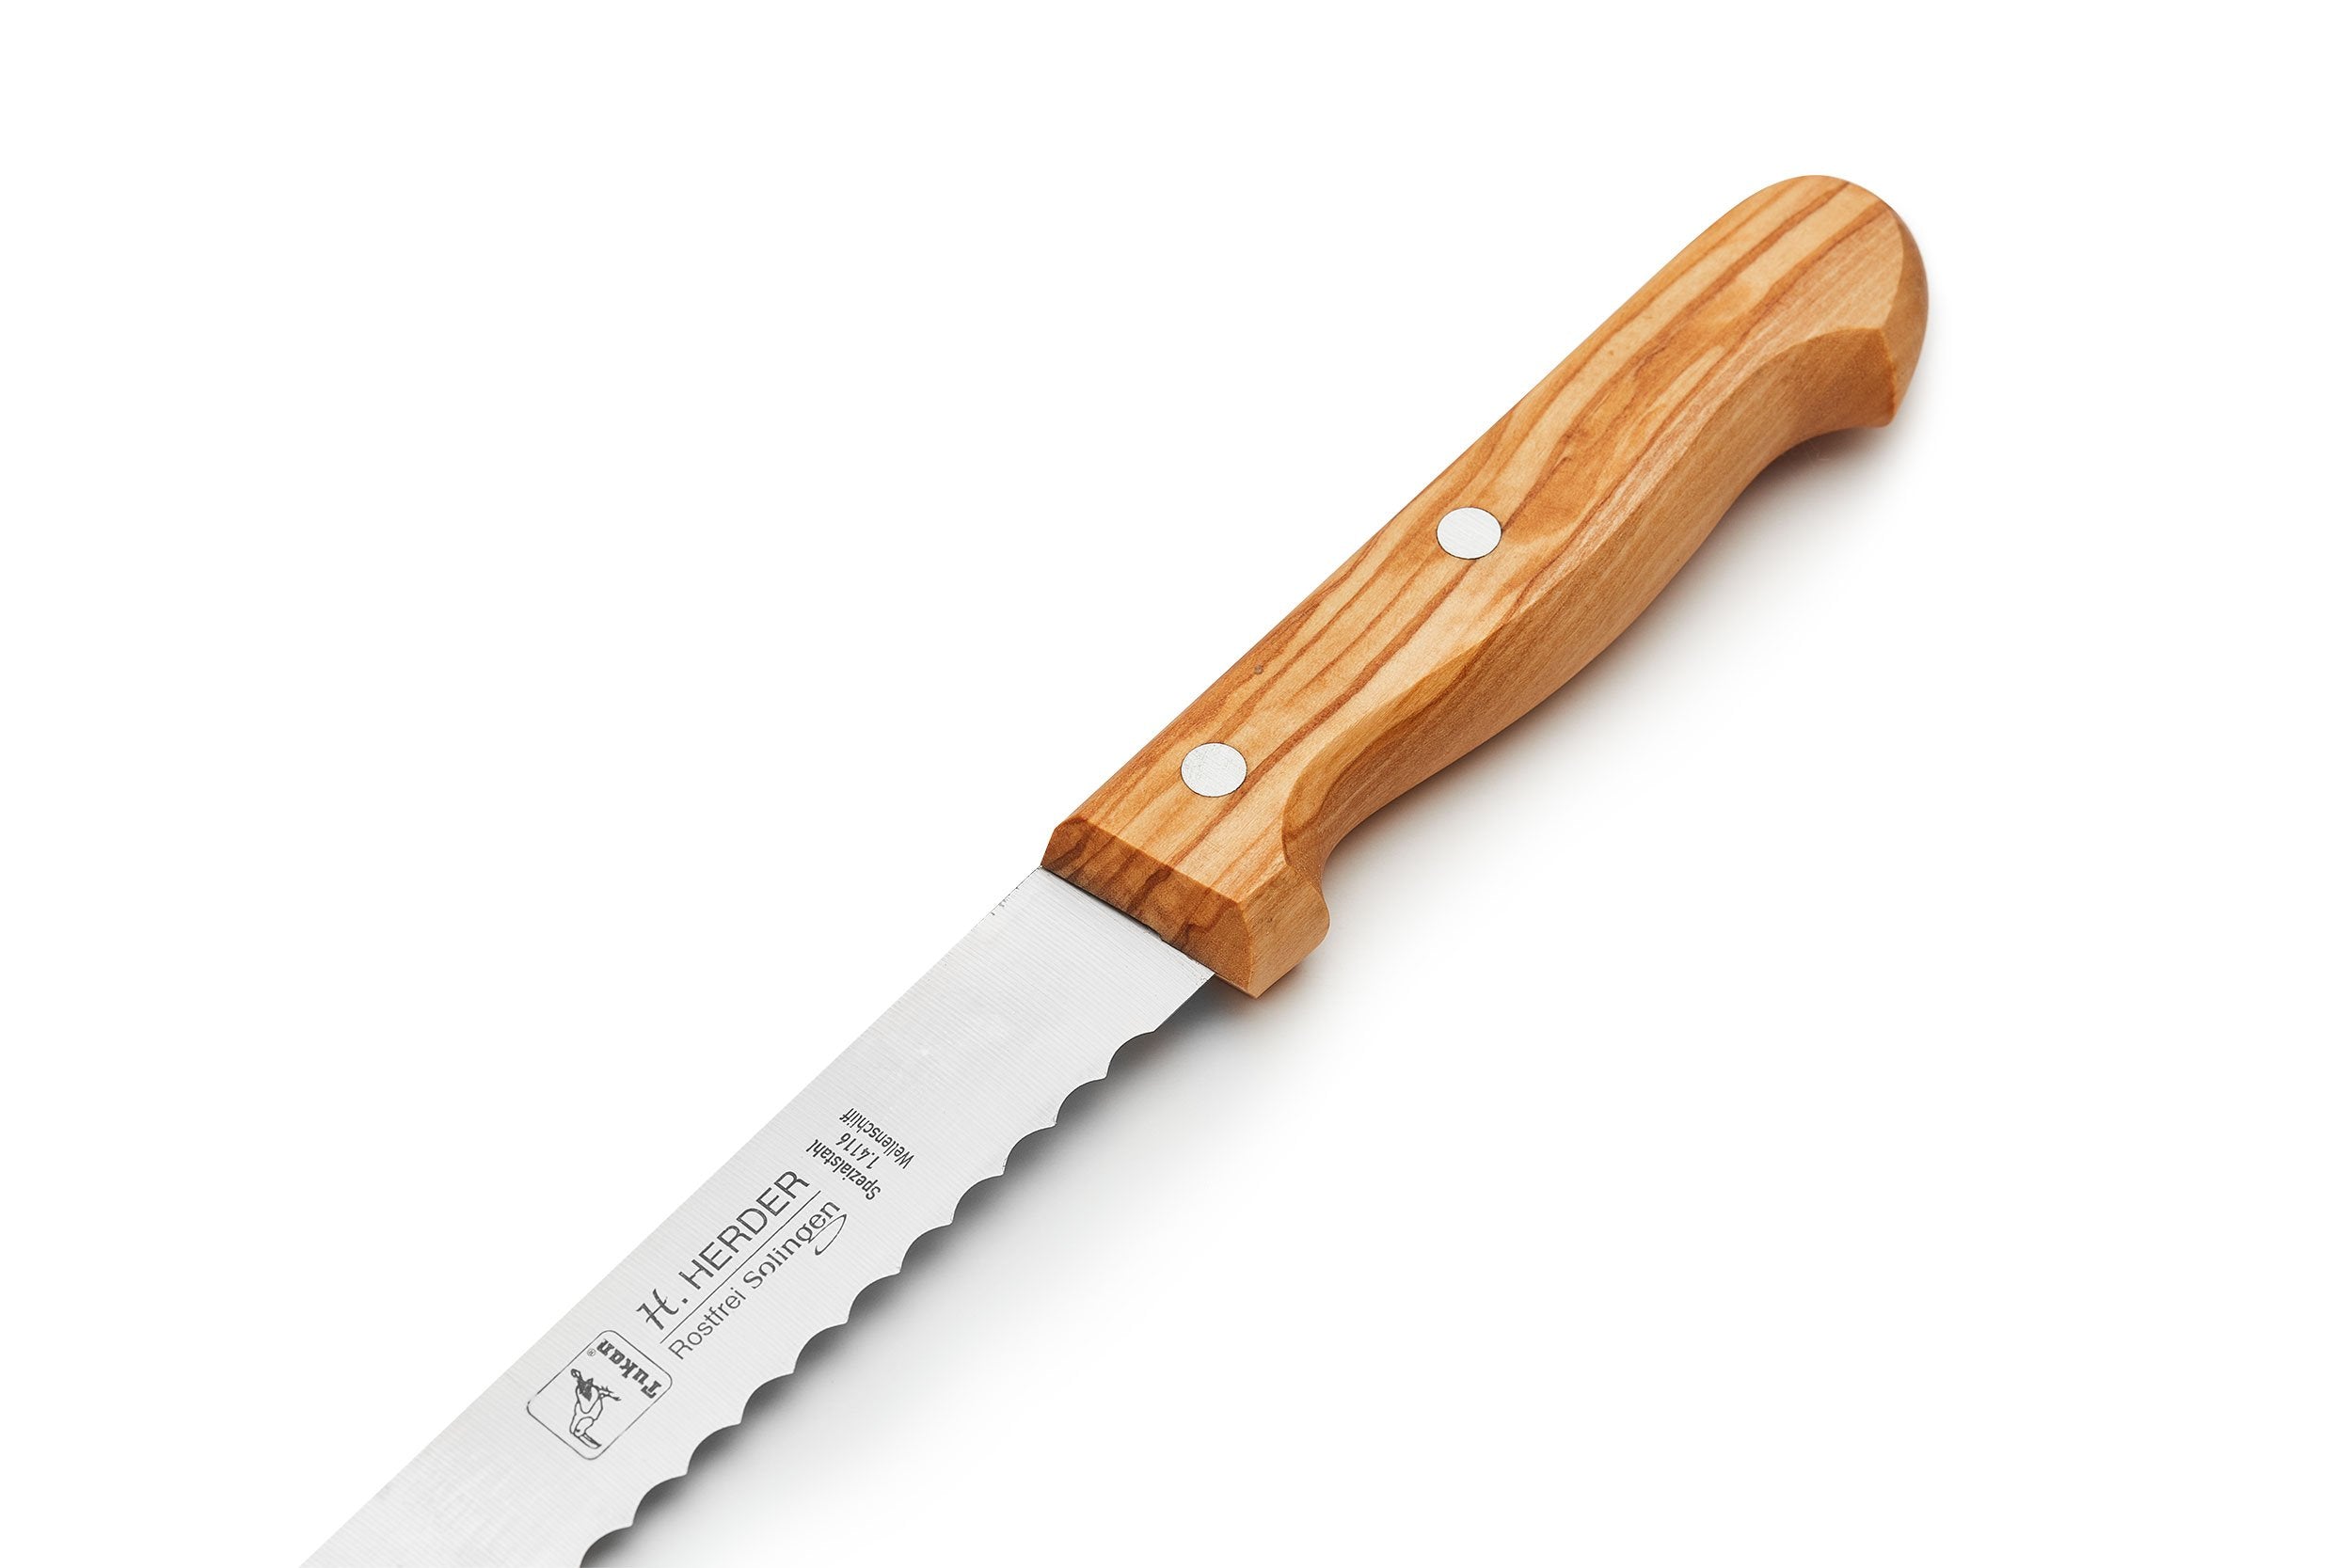 Bread knife olive wood handle 20cm shaft